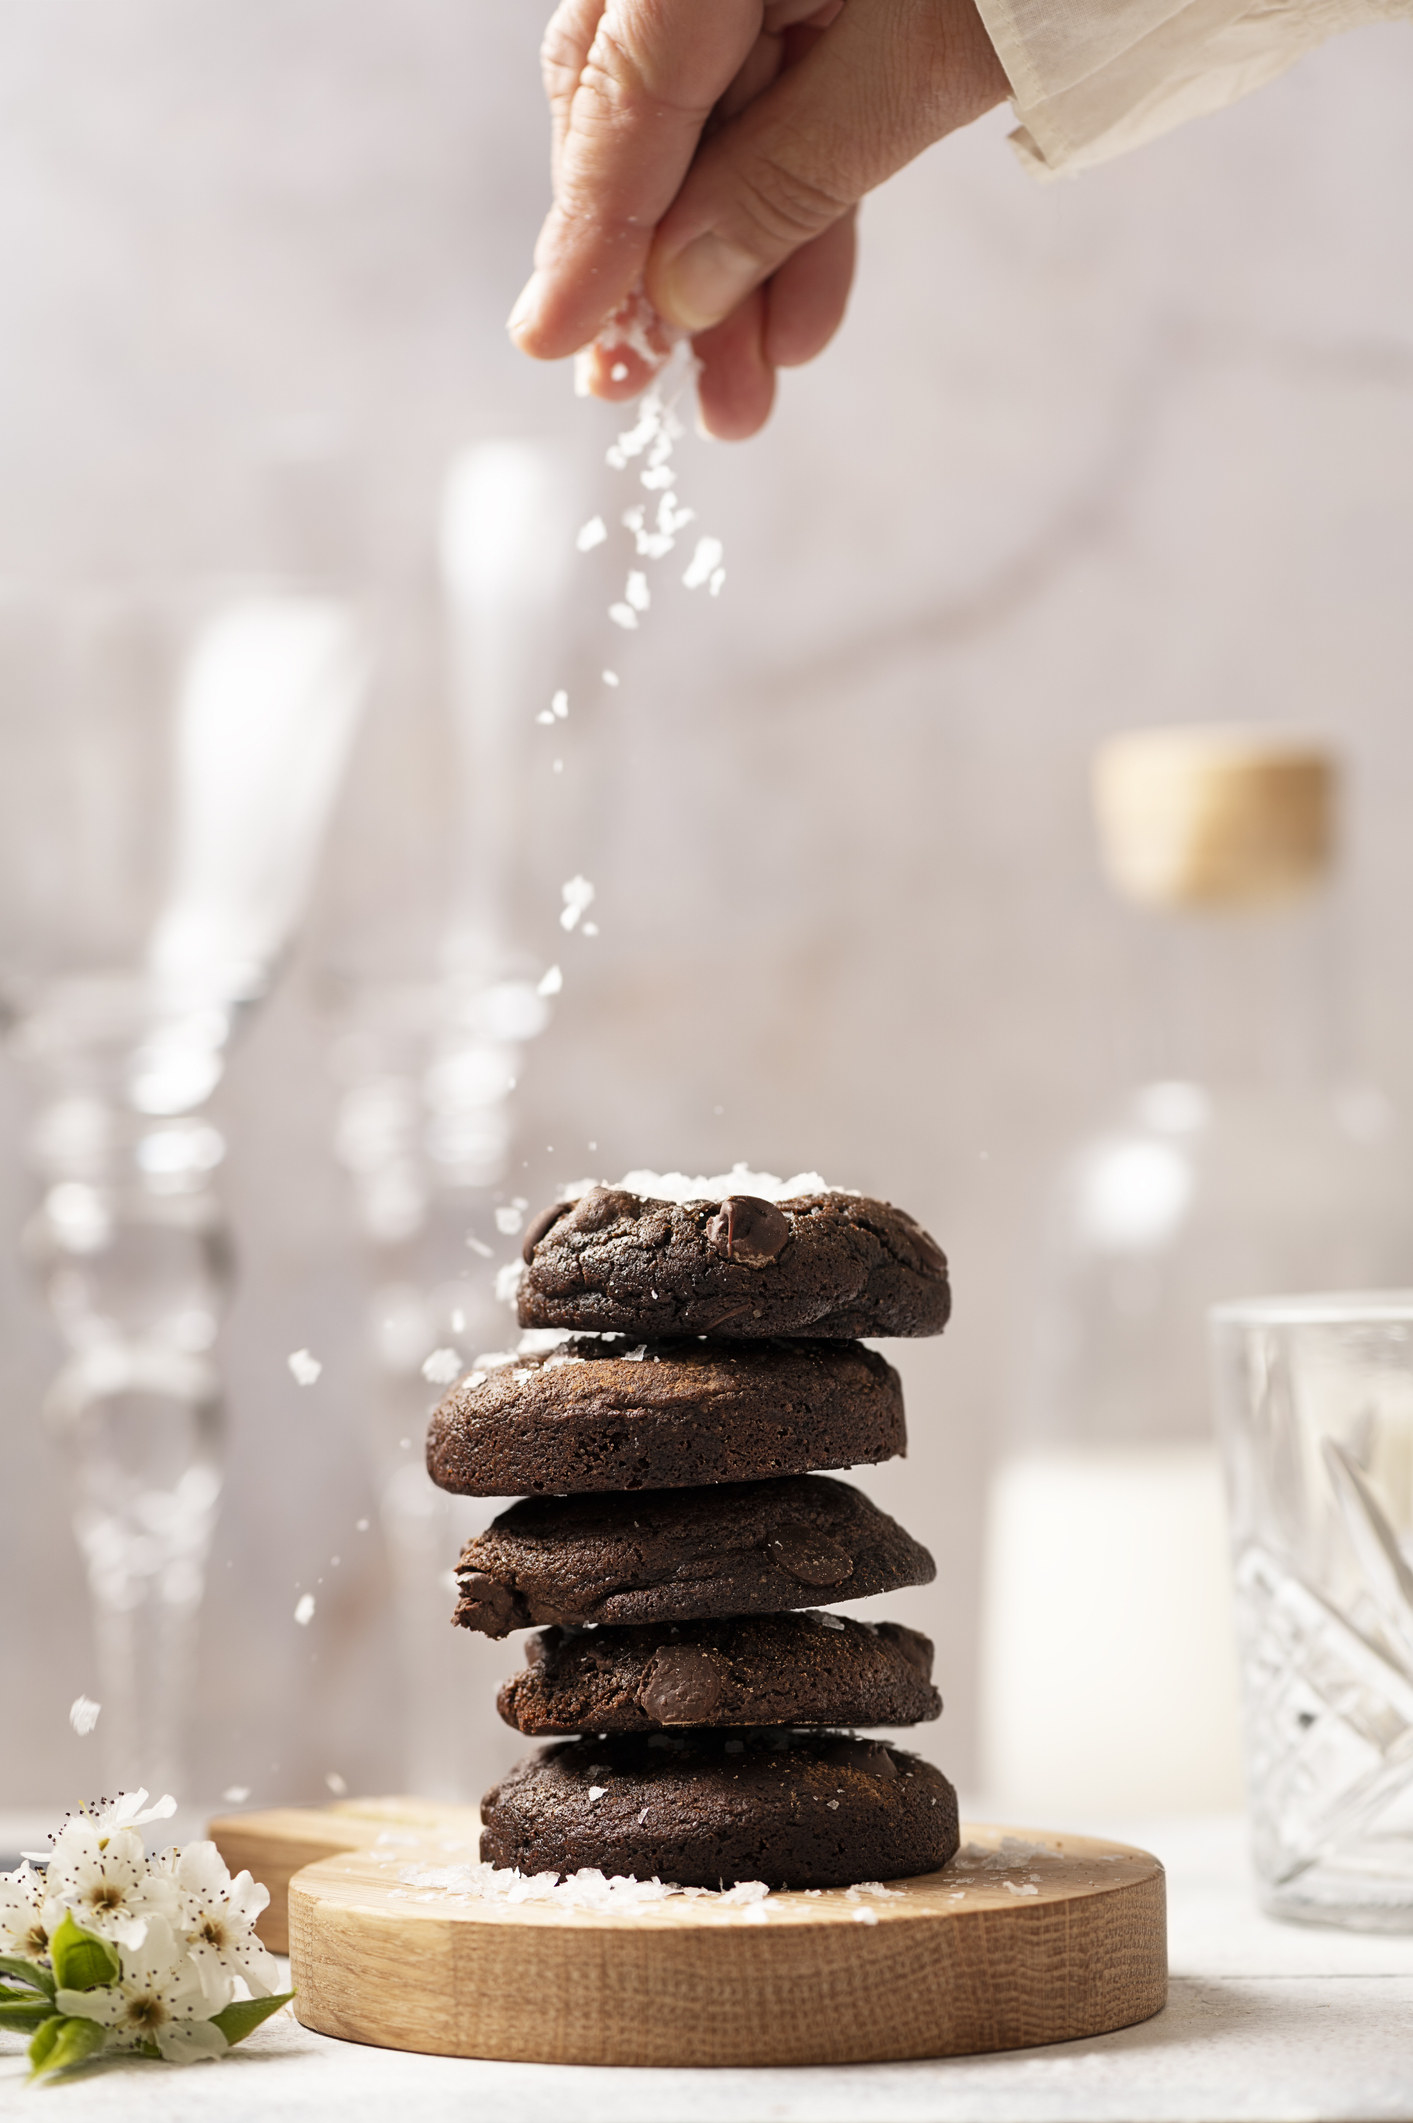 course salt being sprinkled on chocolate cookies